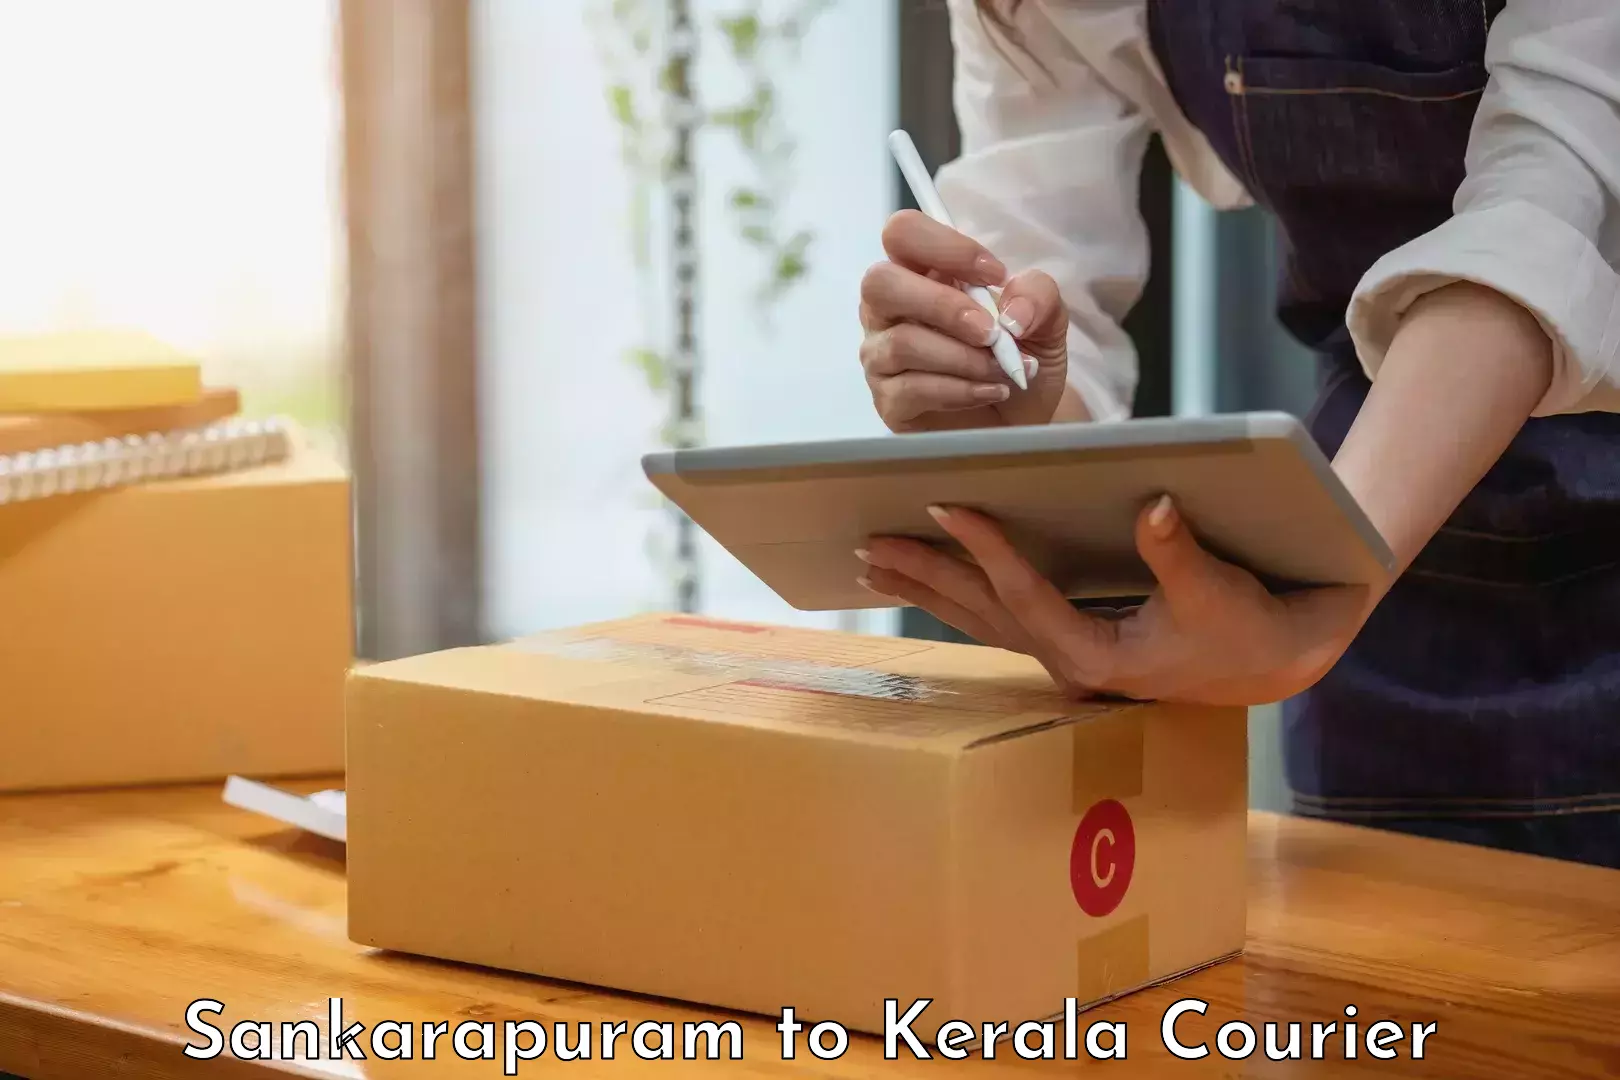 Courier service innovation Sankarapuram to Cherthala